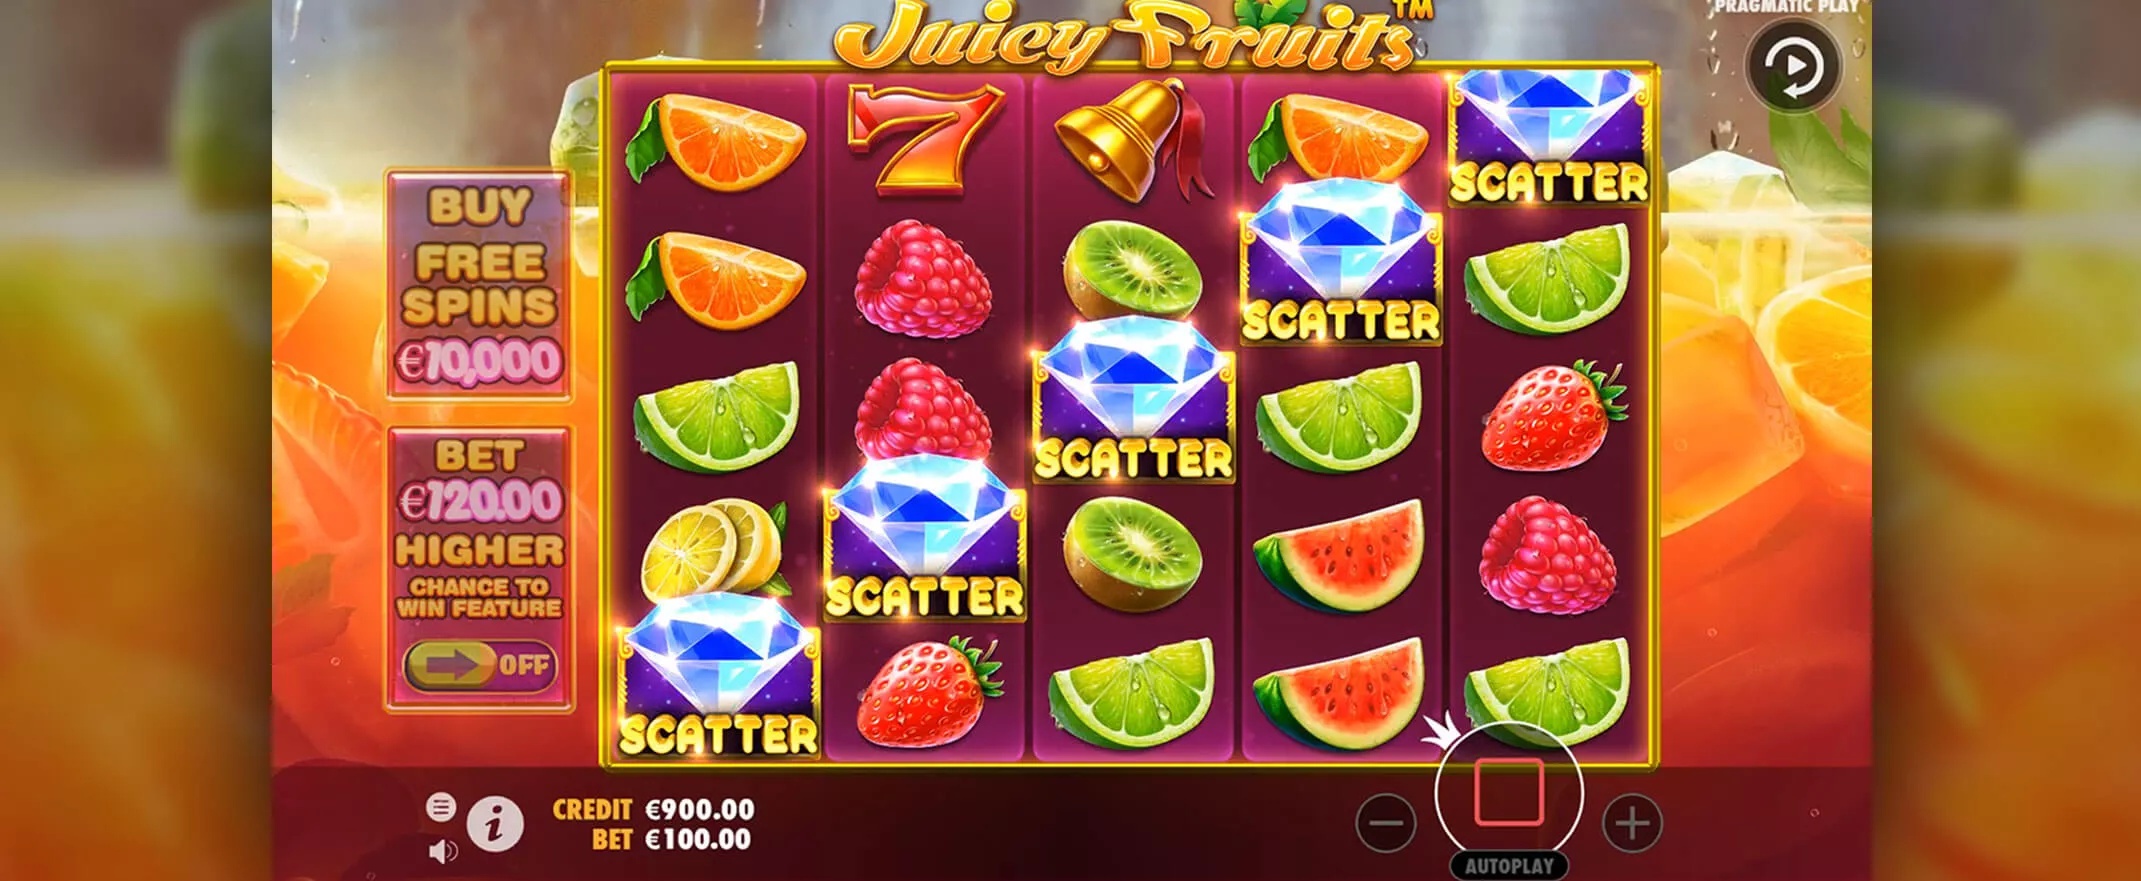 Juicy Fruits slot screenshot of the reels